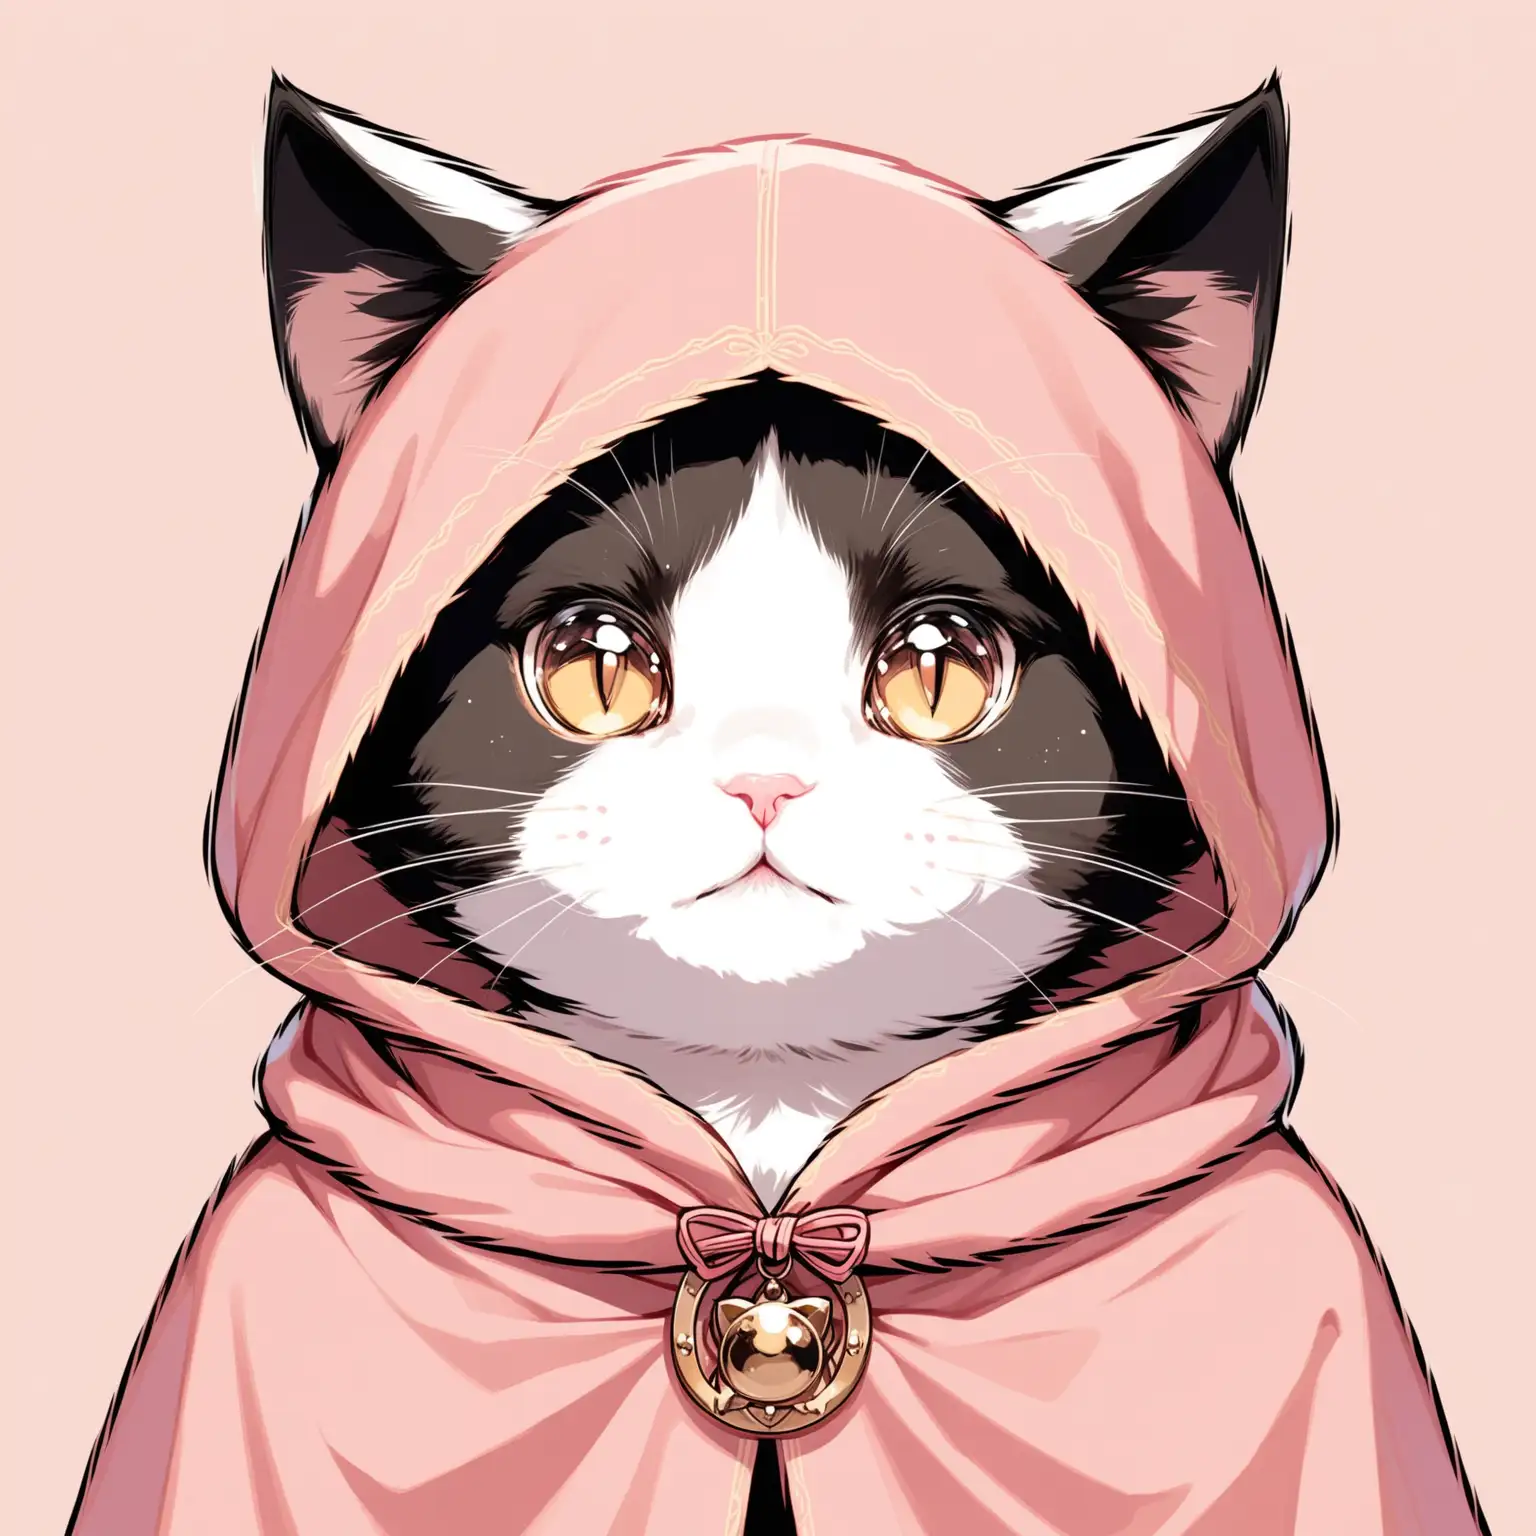 Adorable Cat Portrait Cloaked Feline on Soft Pink Background